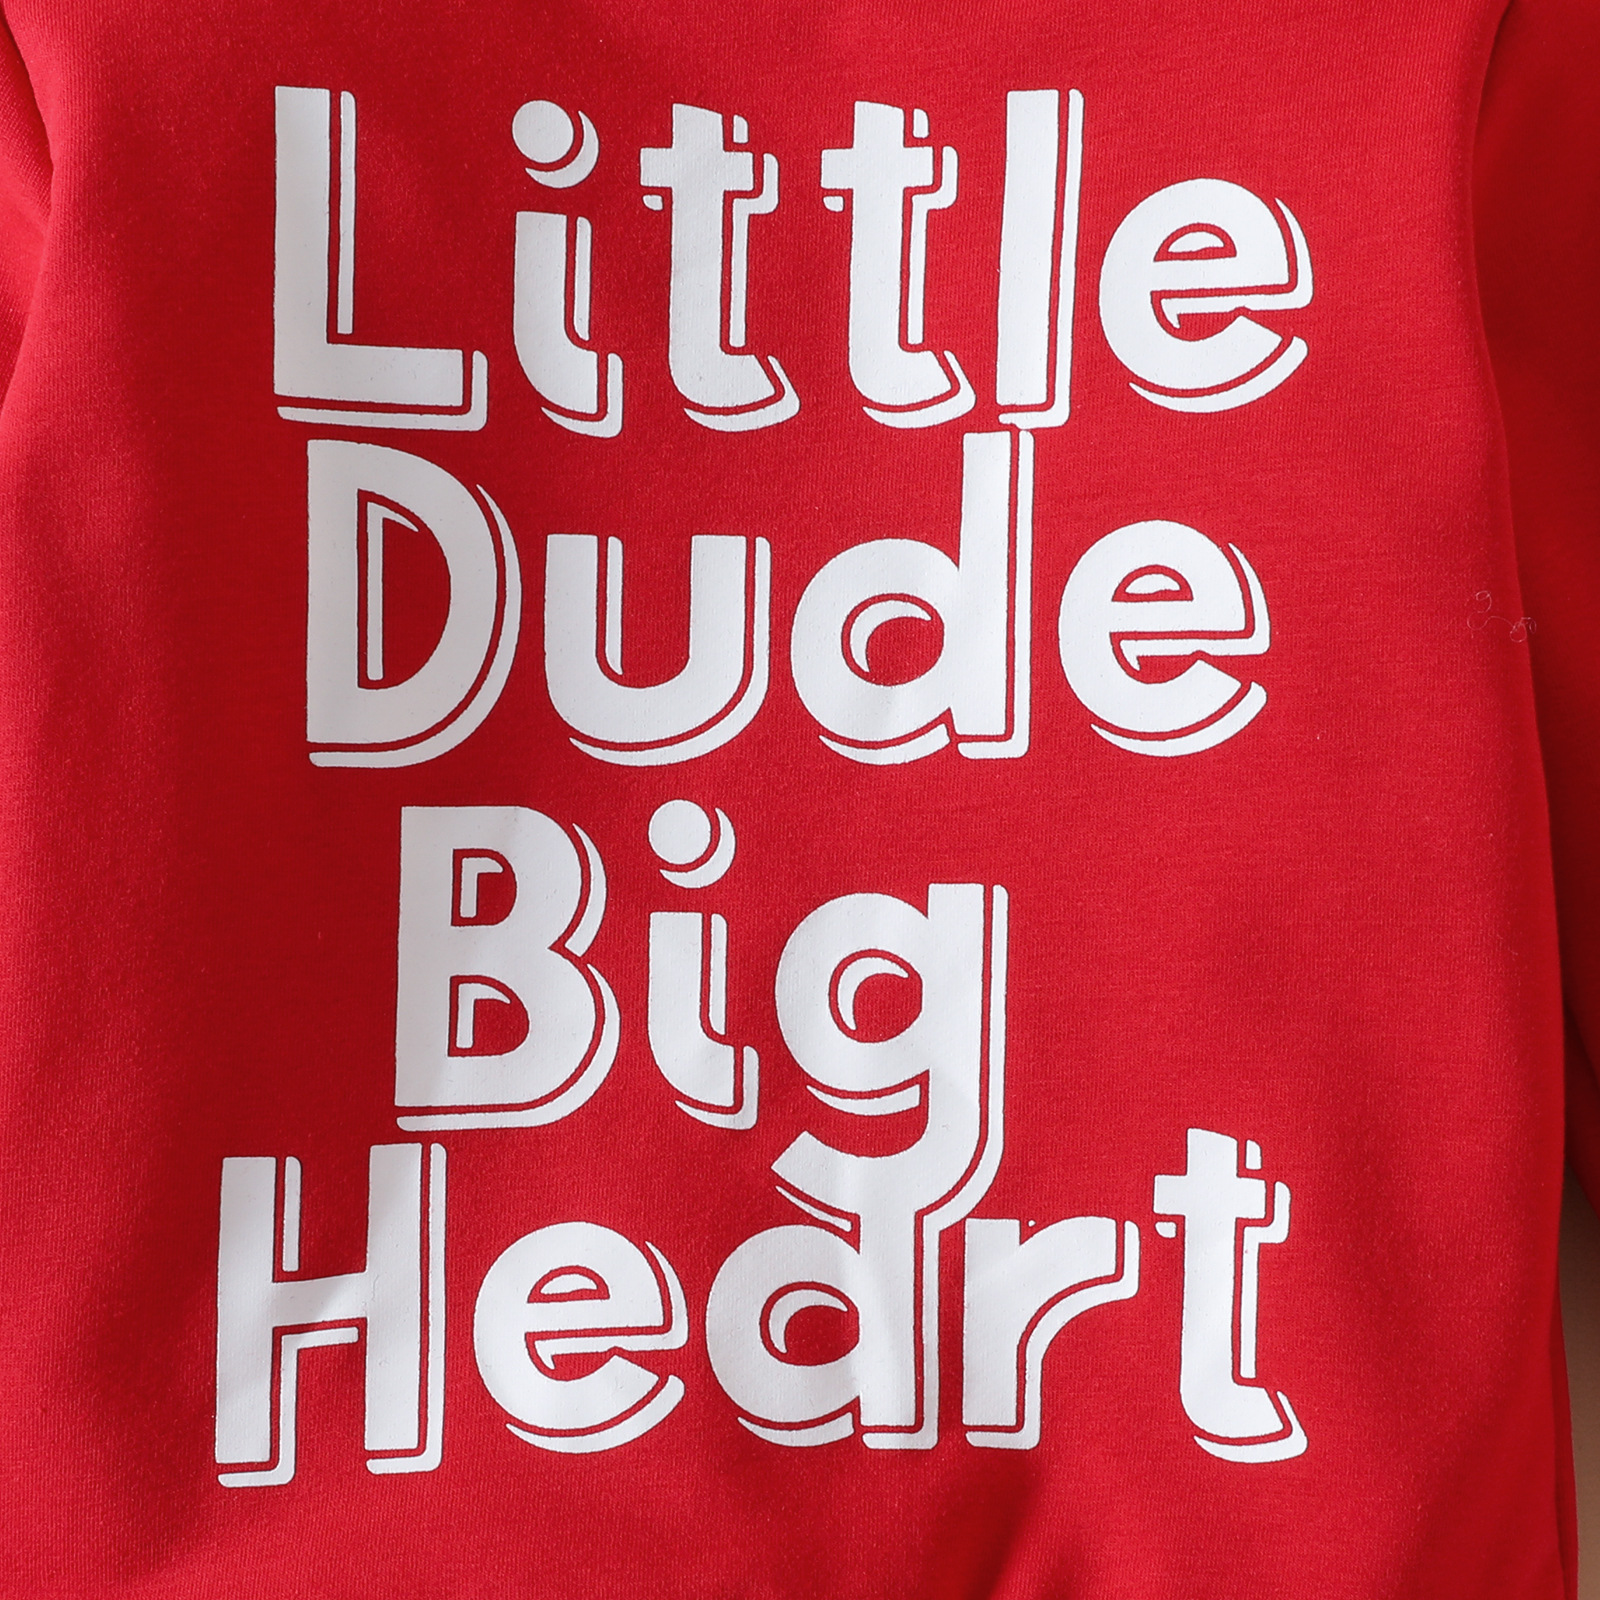 Baby Little Dude Big Heart Sweatshirt